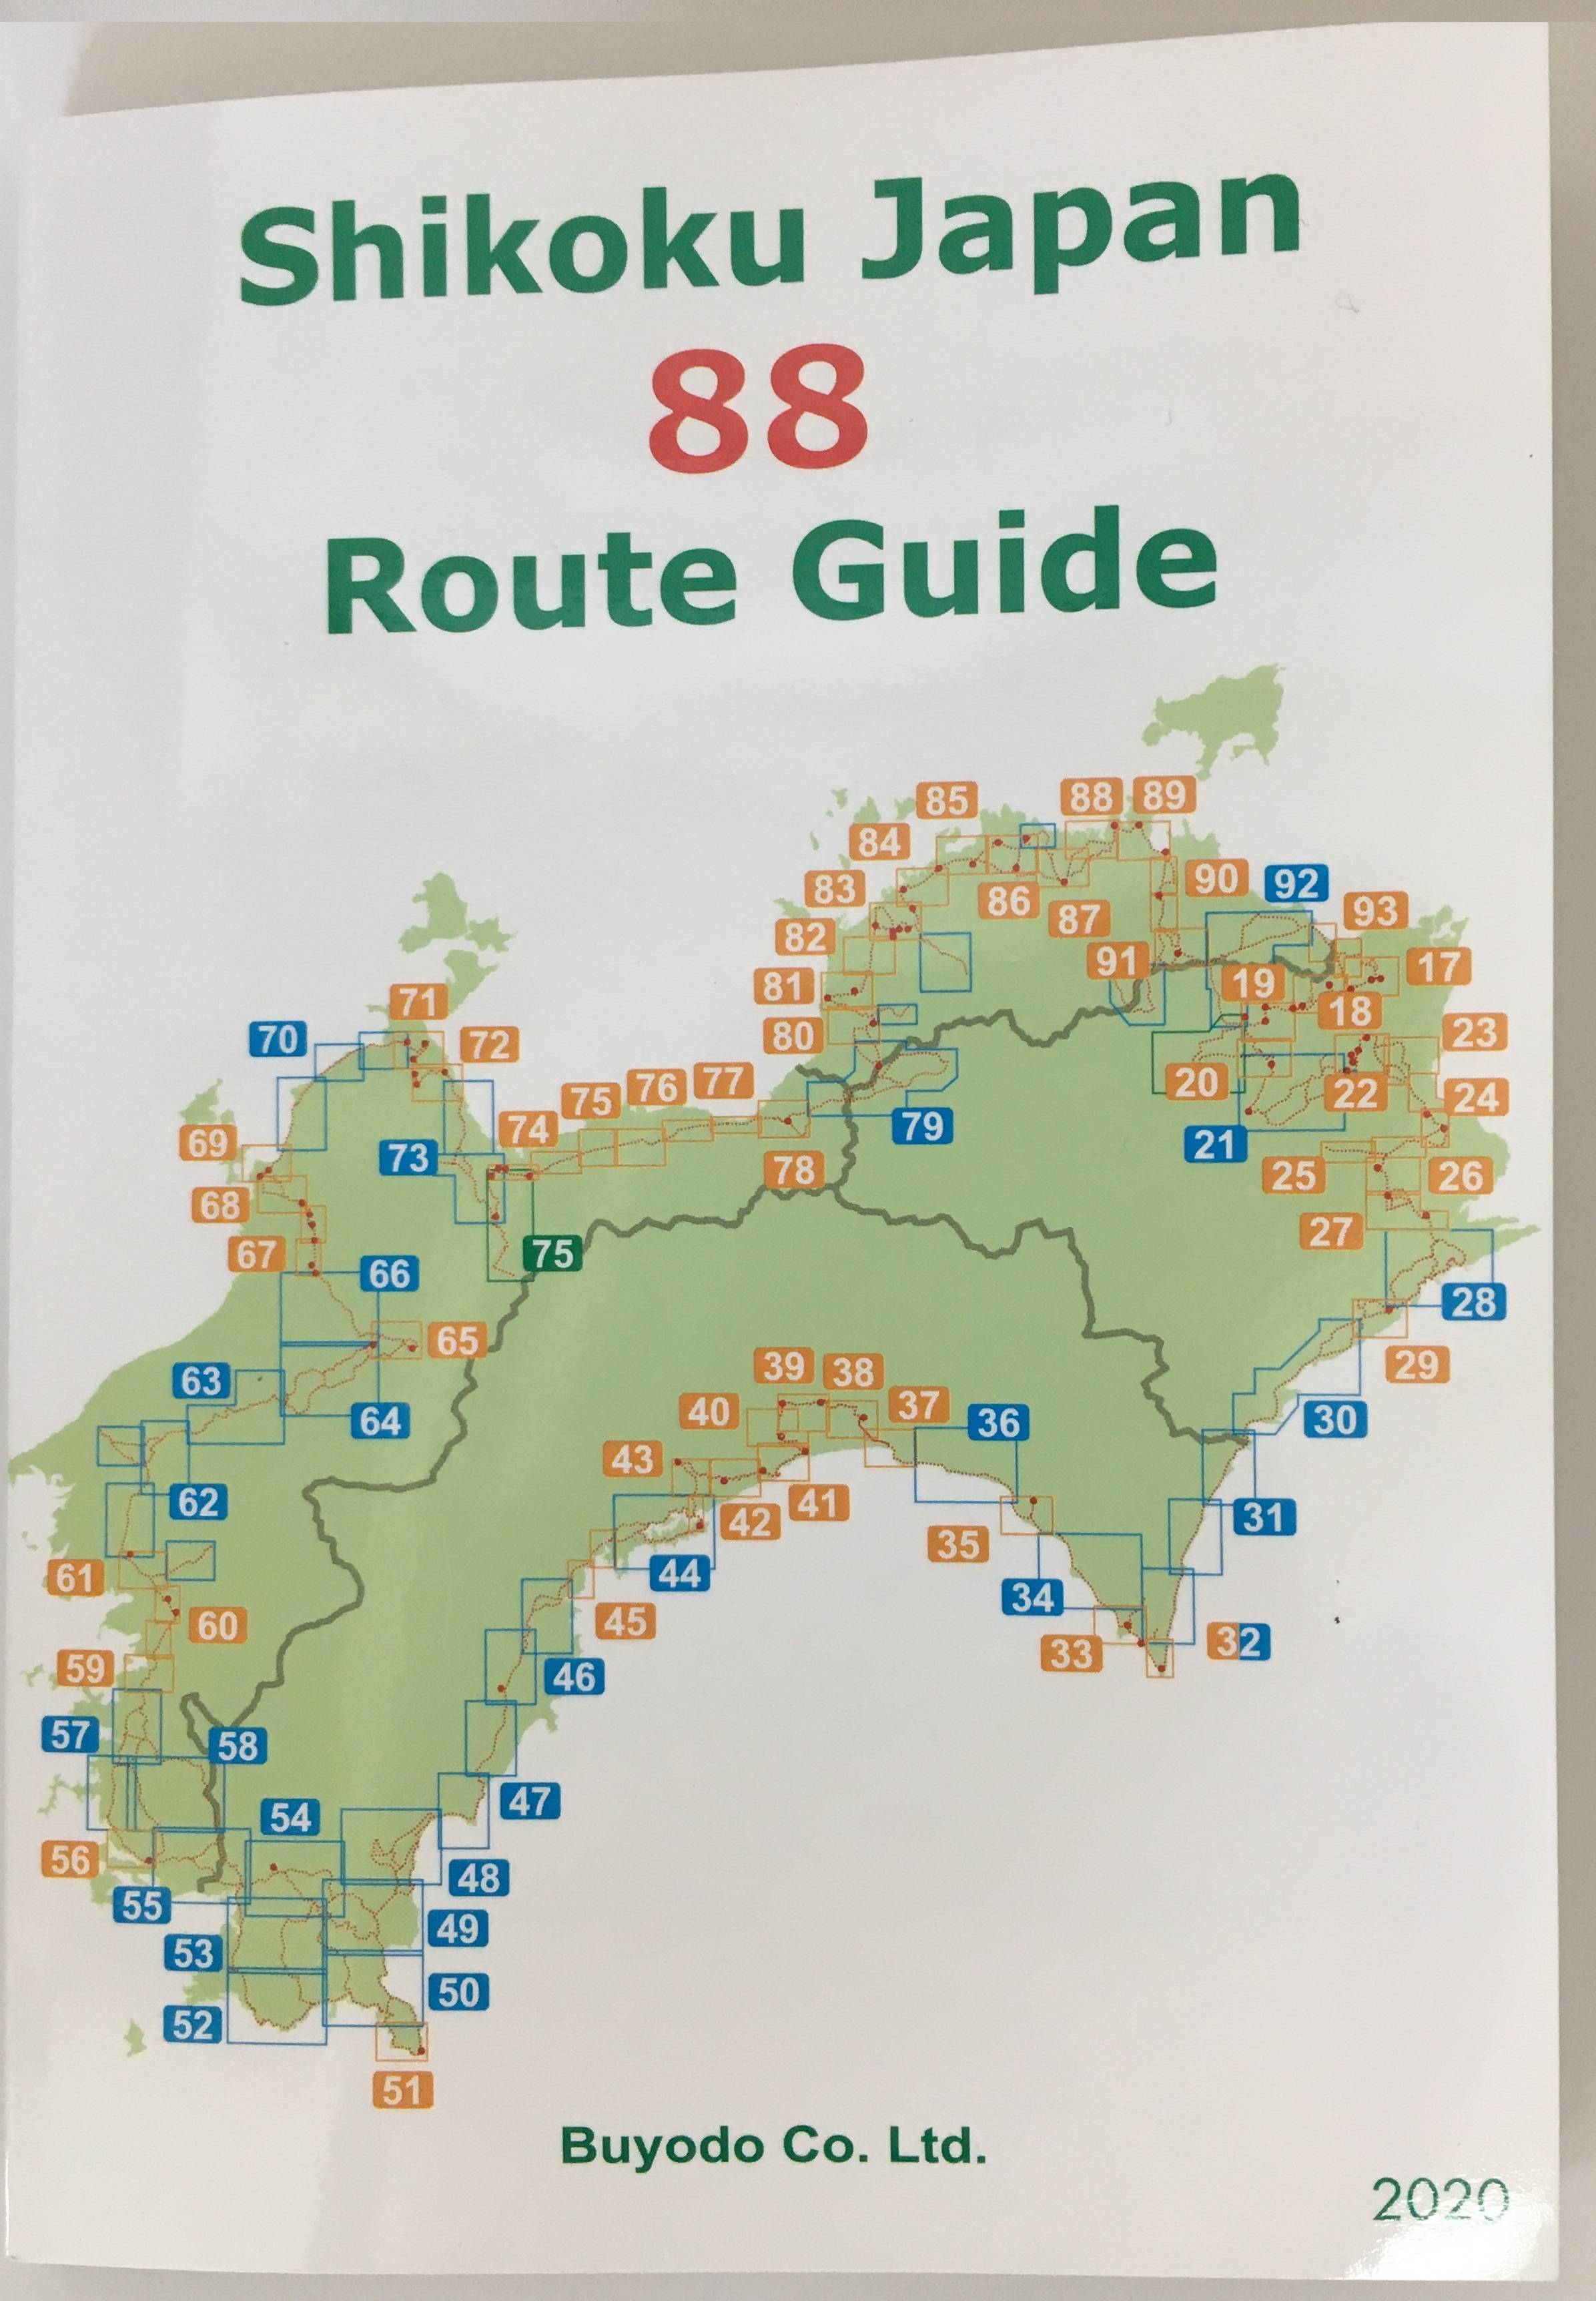 SHIKOKU JAPAN 88 Route Guide